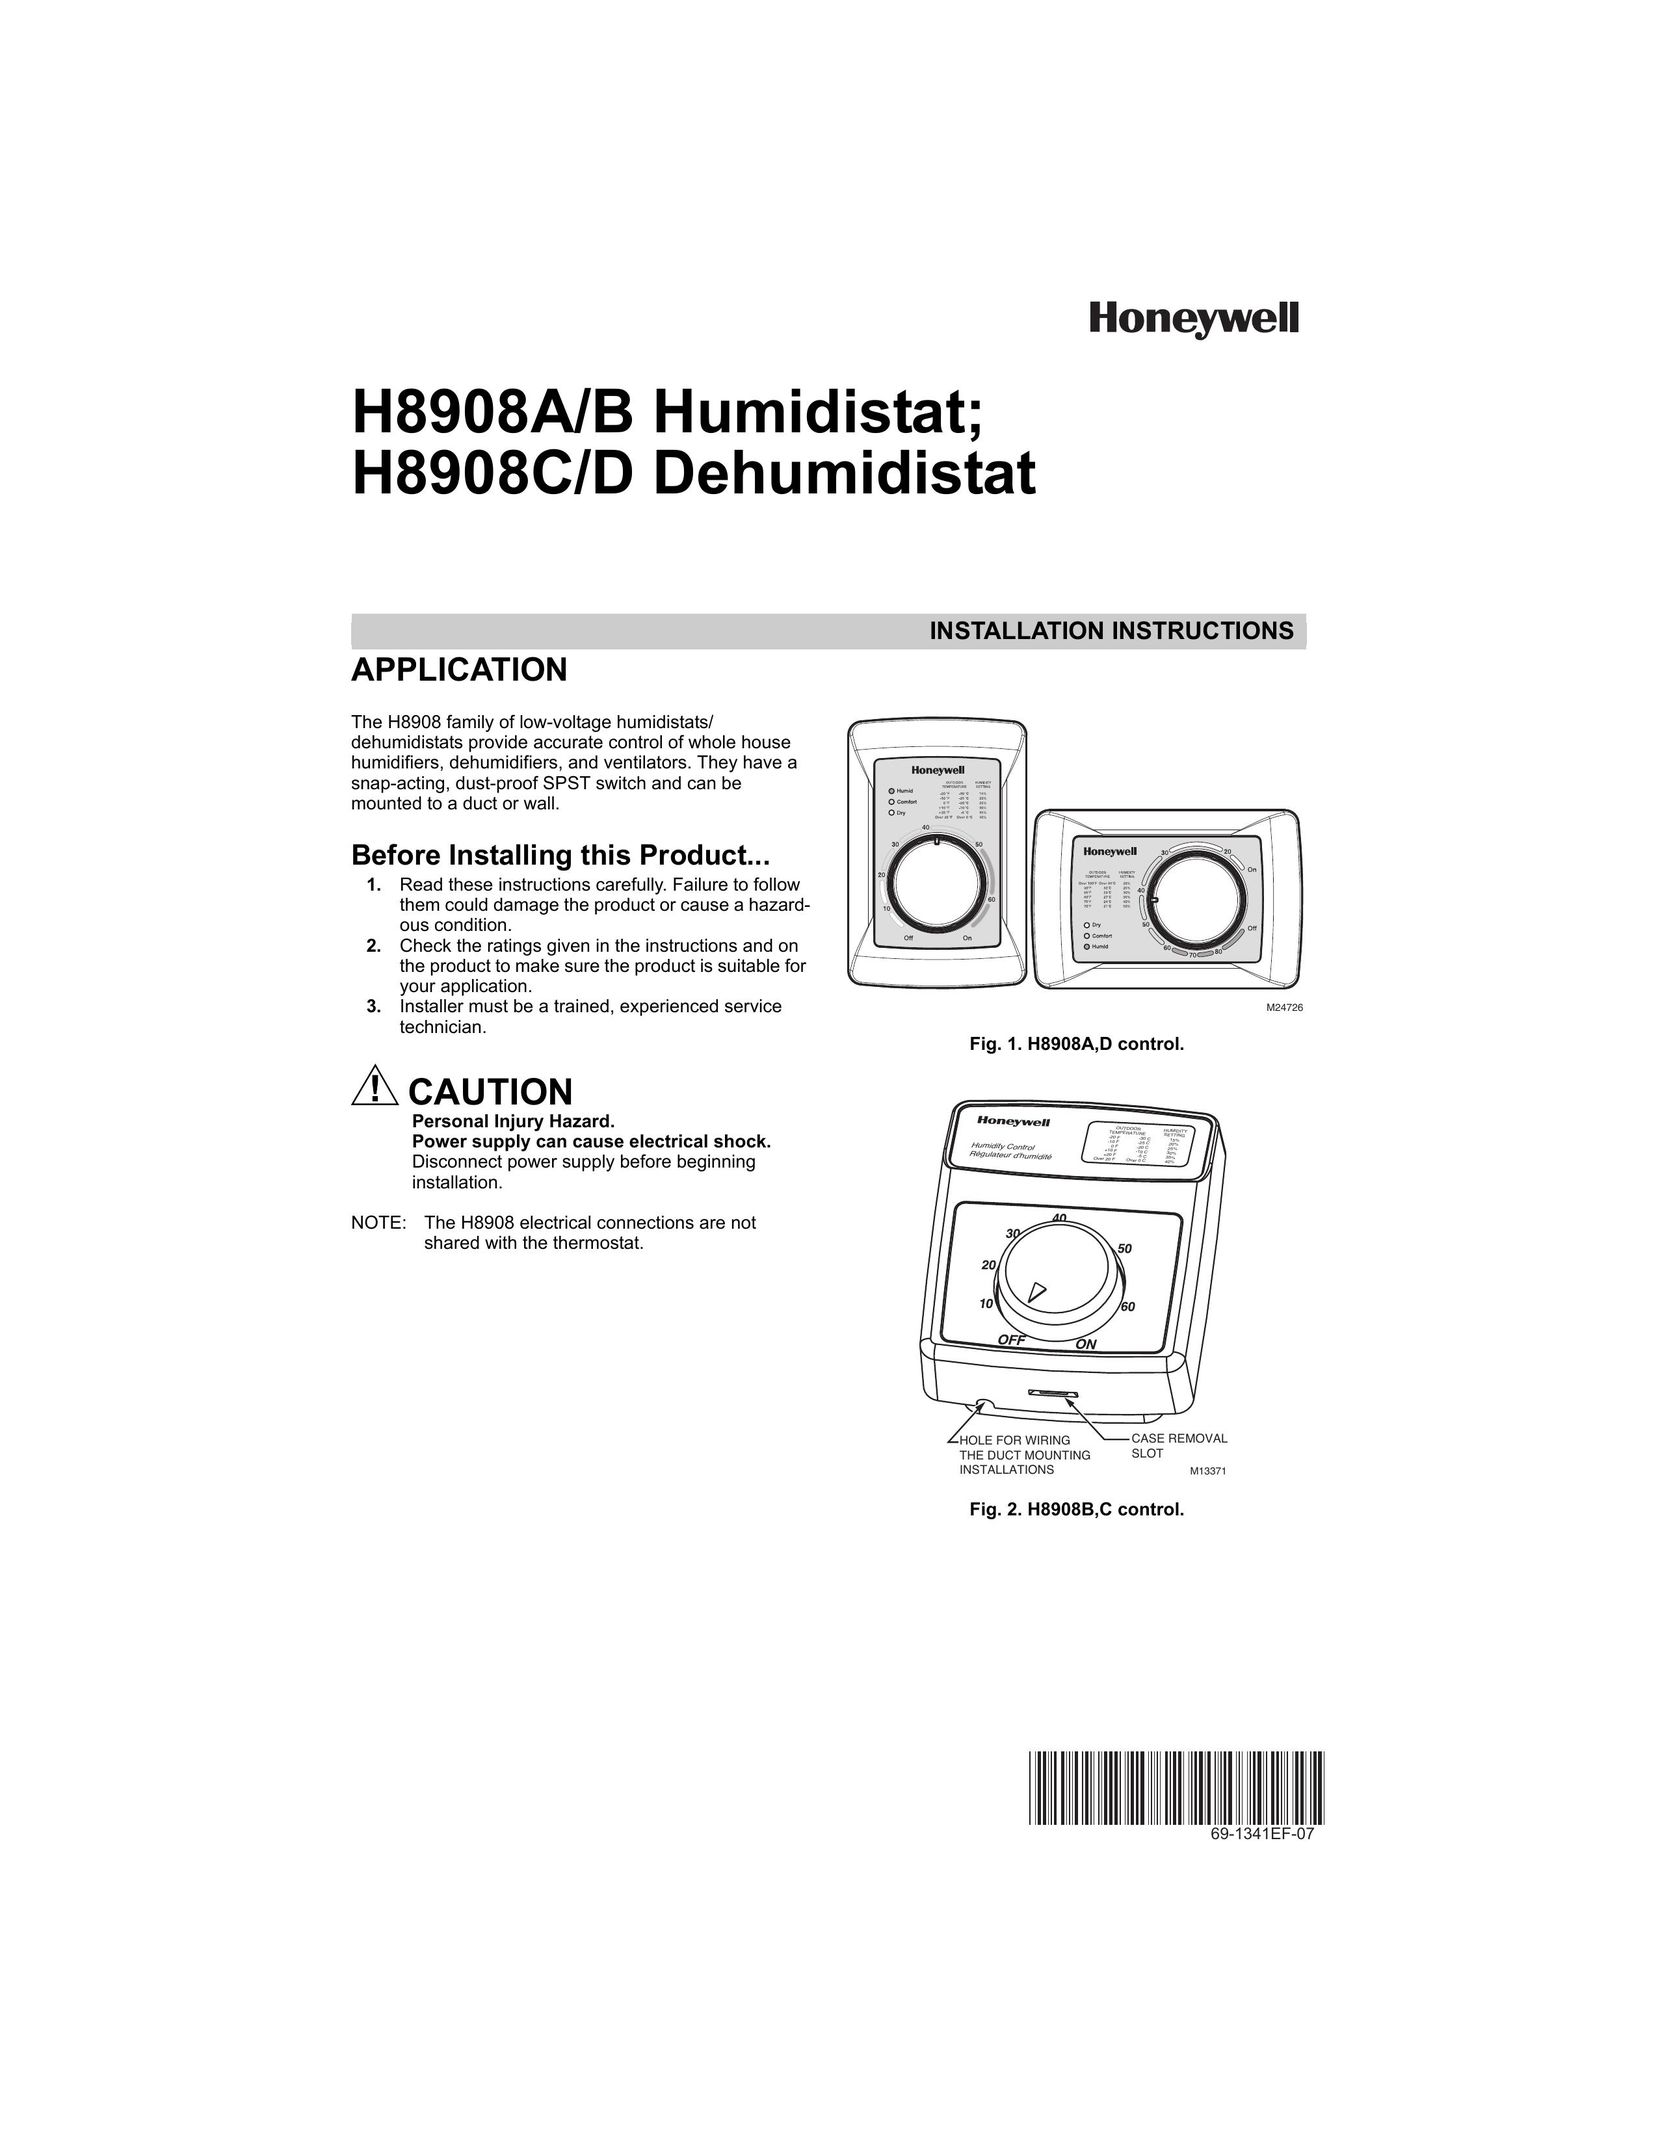 Honeywell H8908C/D Dehumidifier User Manual